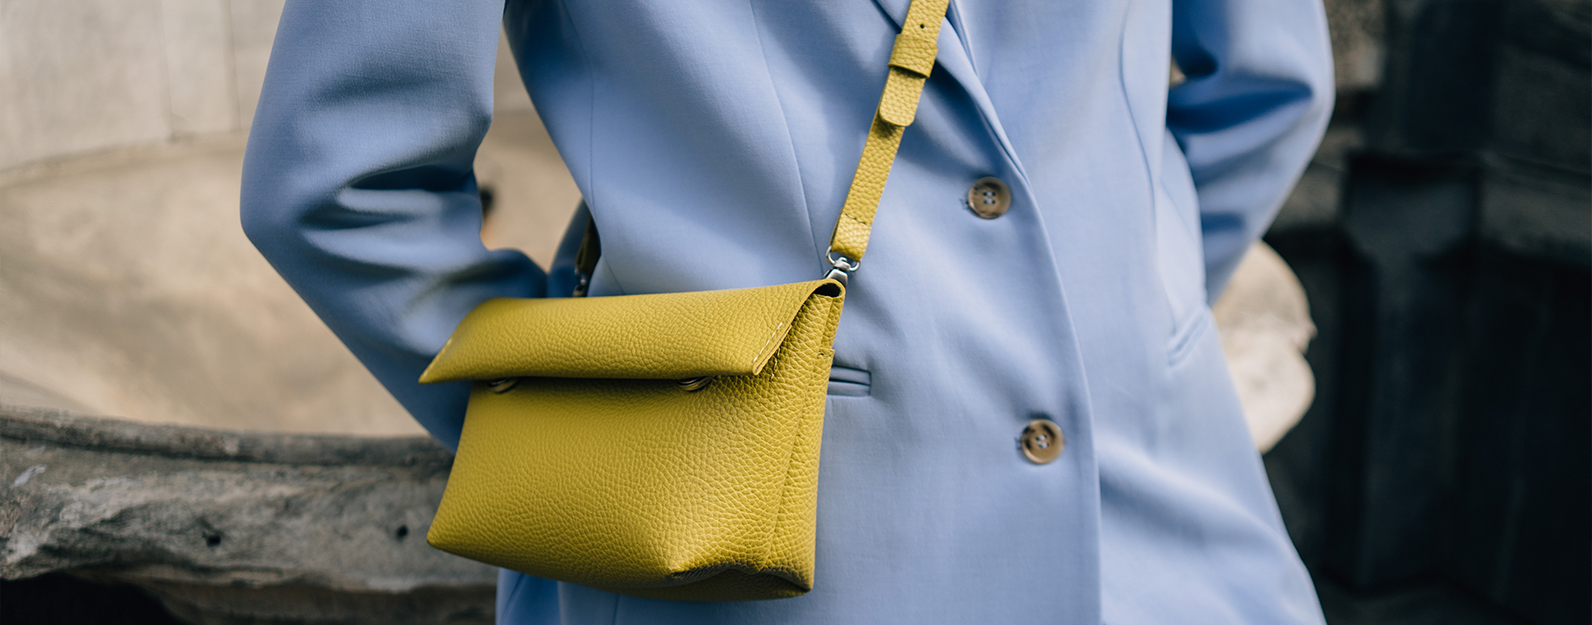 Blue blazer with yellow bag